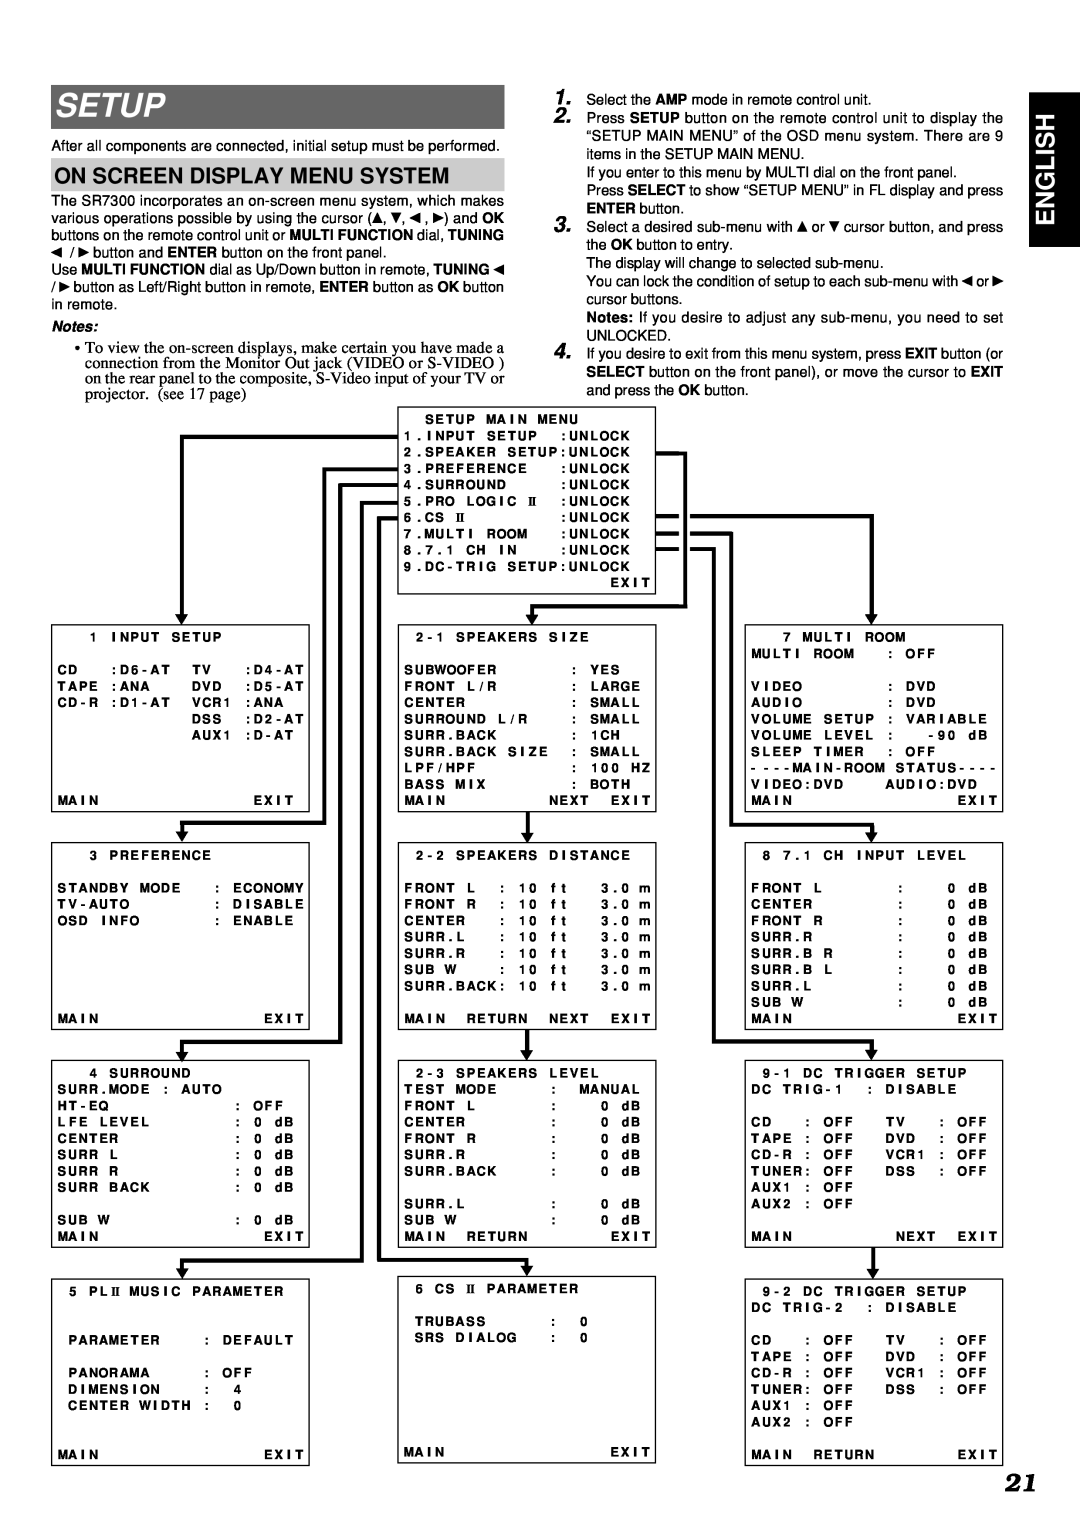 Marantz SR7300 manual Setup, English, On Screen Display Menu System 